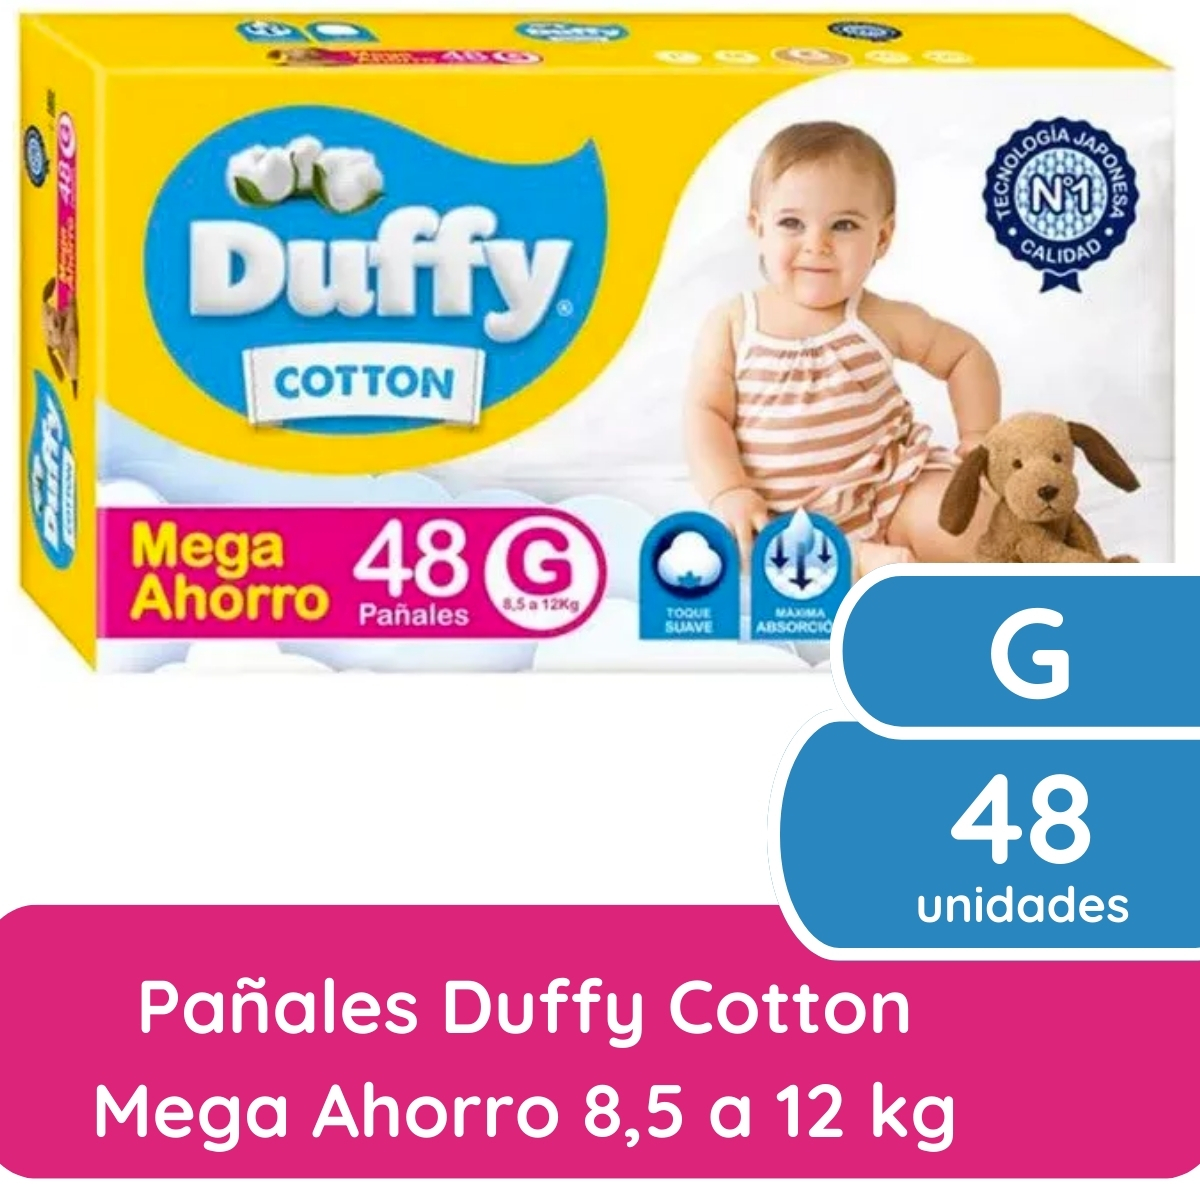 Imagen 1 de 4 de Pañales Duffy Cotton G x 48 unidades